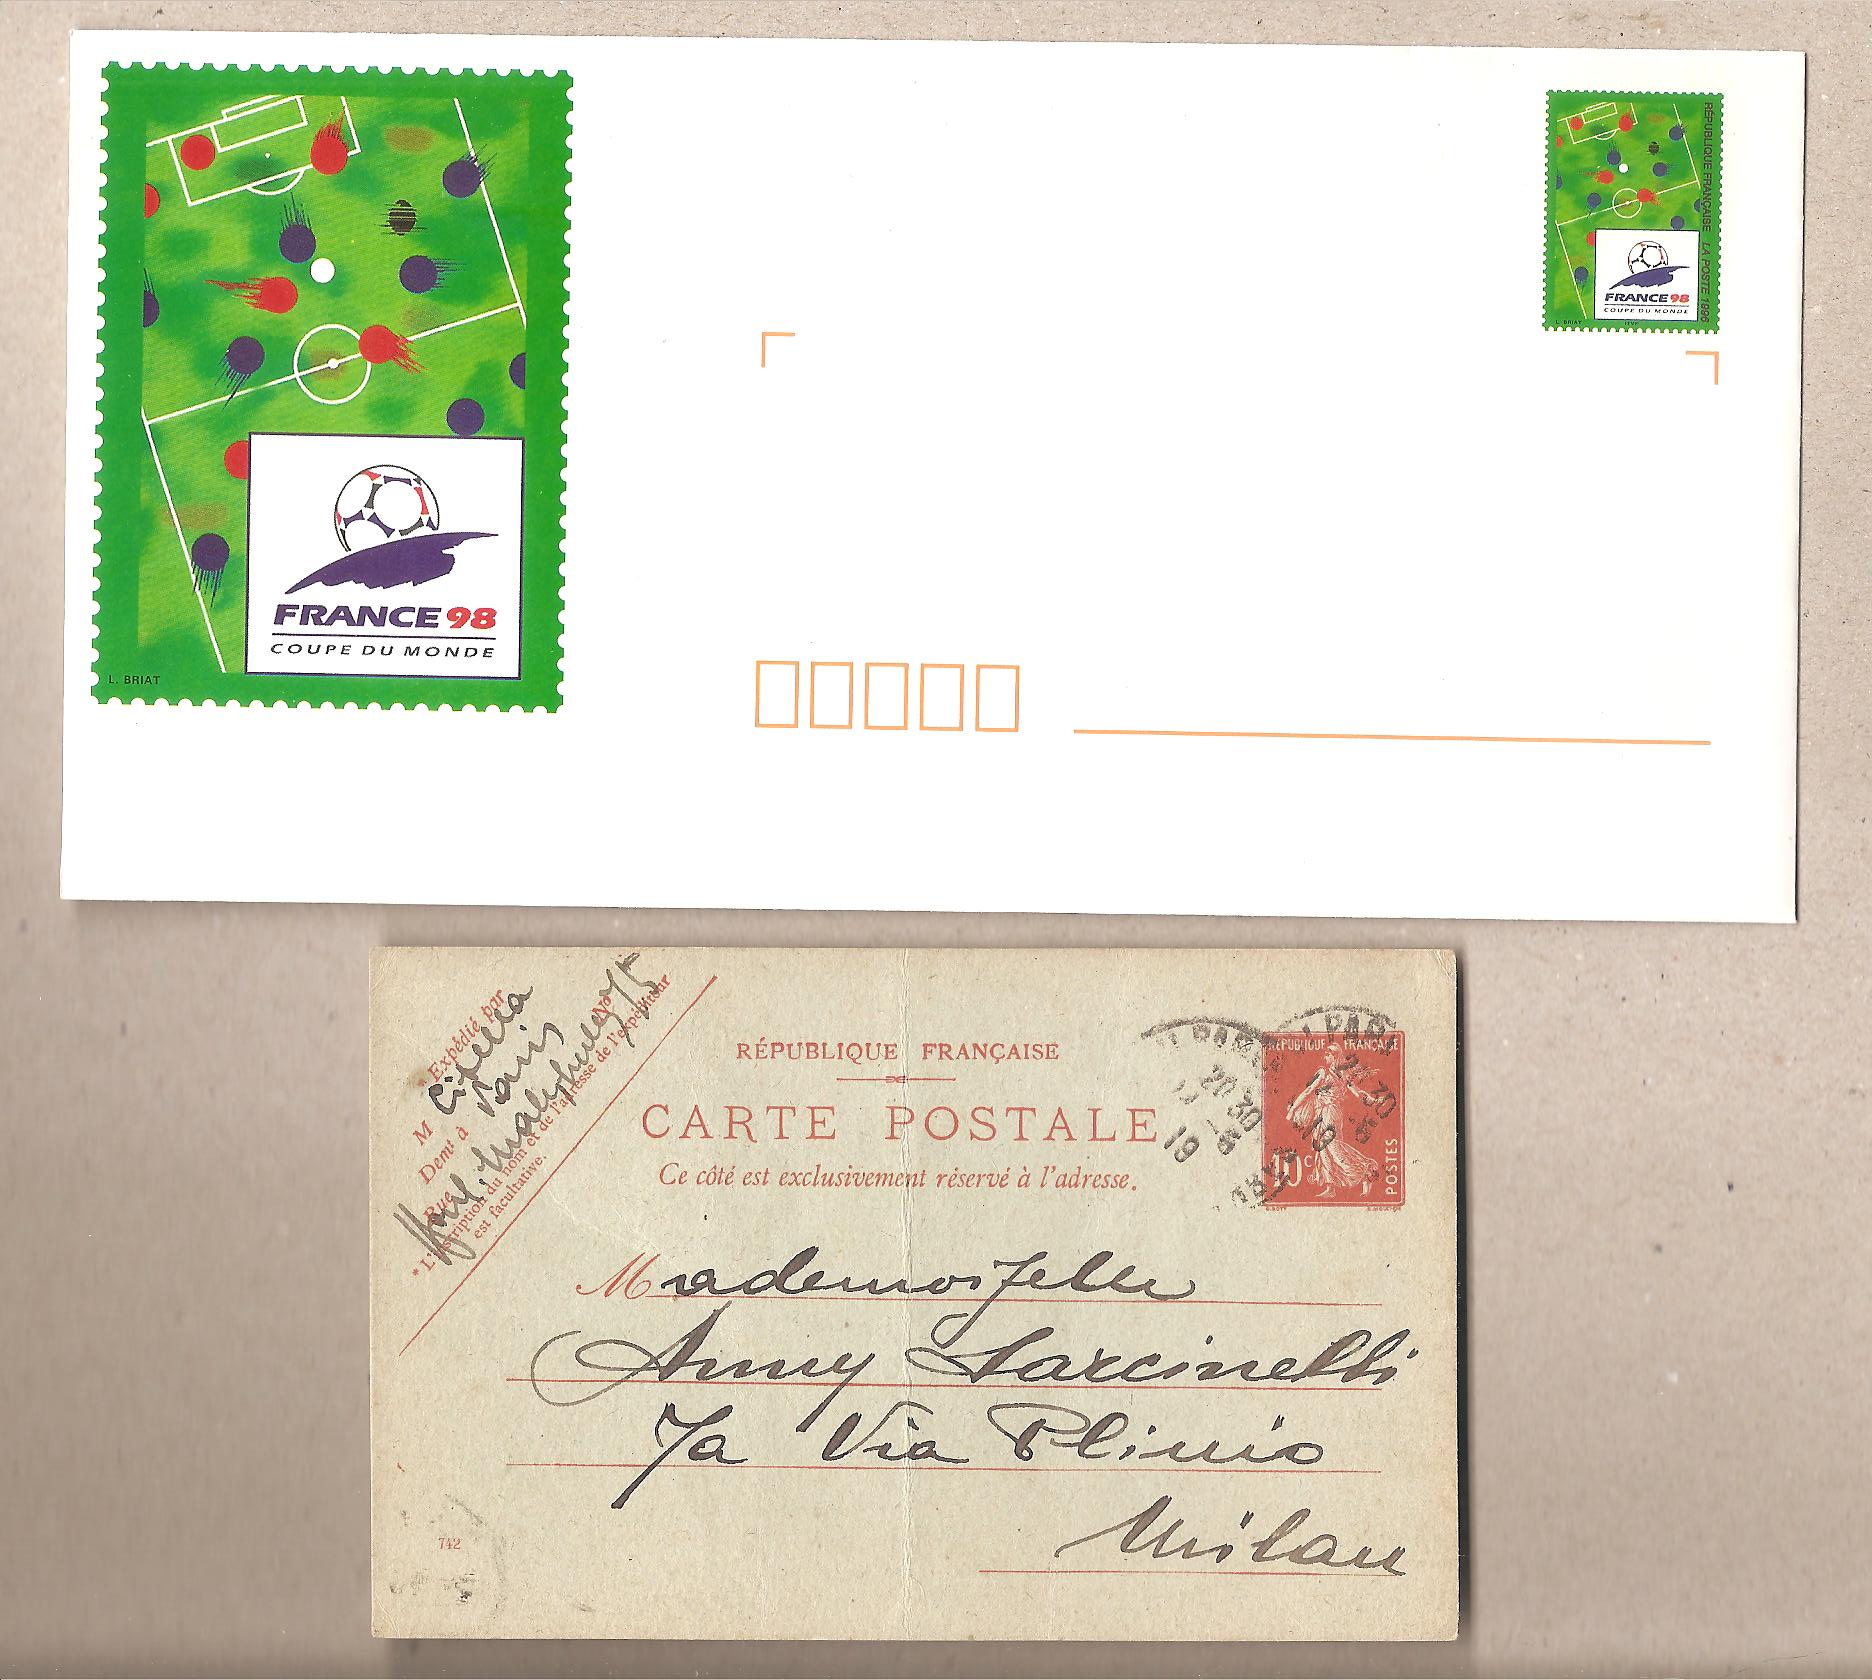 49501 - Francia - busta postale nuova Francia 98 + cartolina postale Marianna usata per l estero 1919